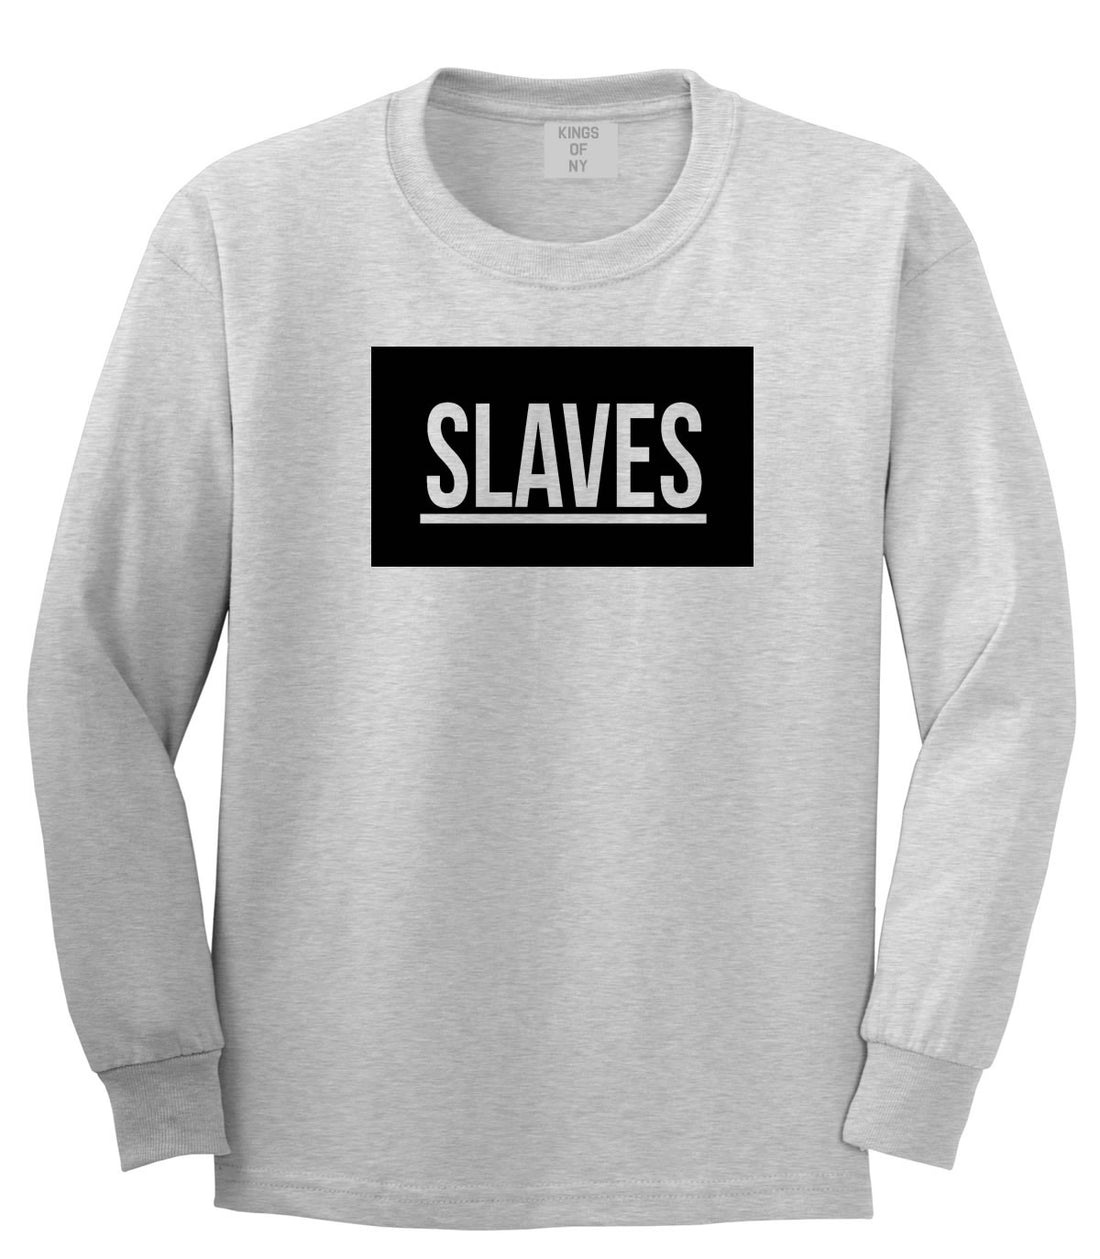 Slaves Fashion Kanye Lyrics Music West East Long Sleeve Boys Kids T-Shirt In Grey by Kings Of NY